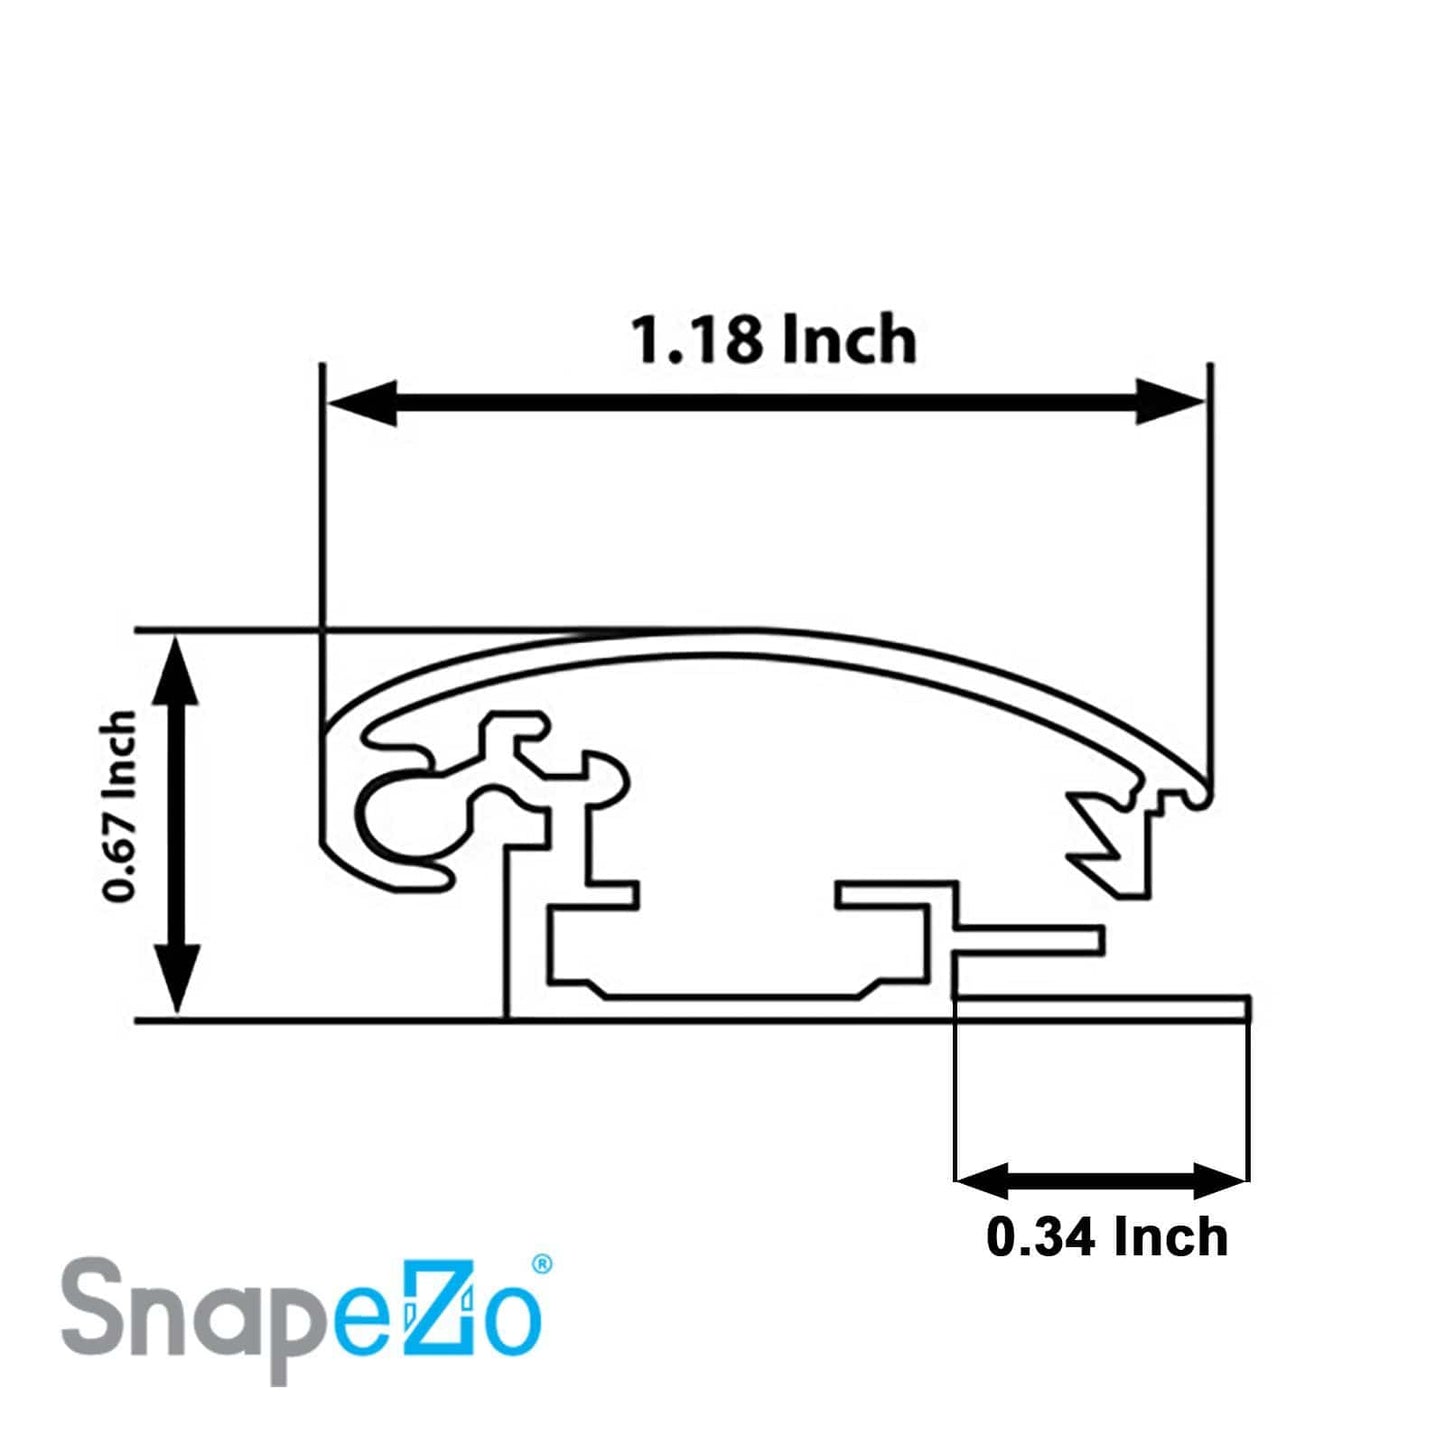 28x32 Black SnapeZo® Snap Frame - 1.2" Profile - Snap Frames Direct